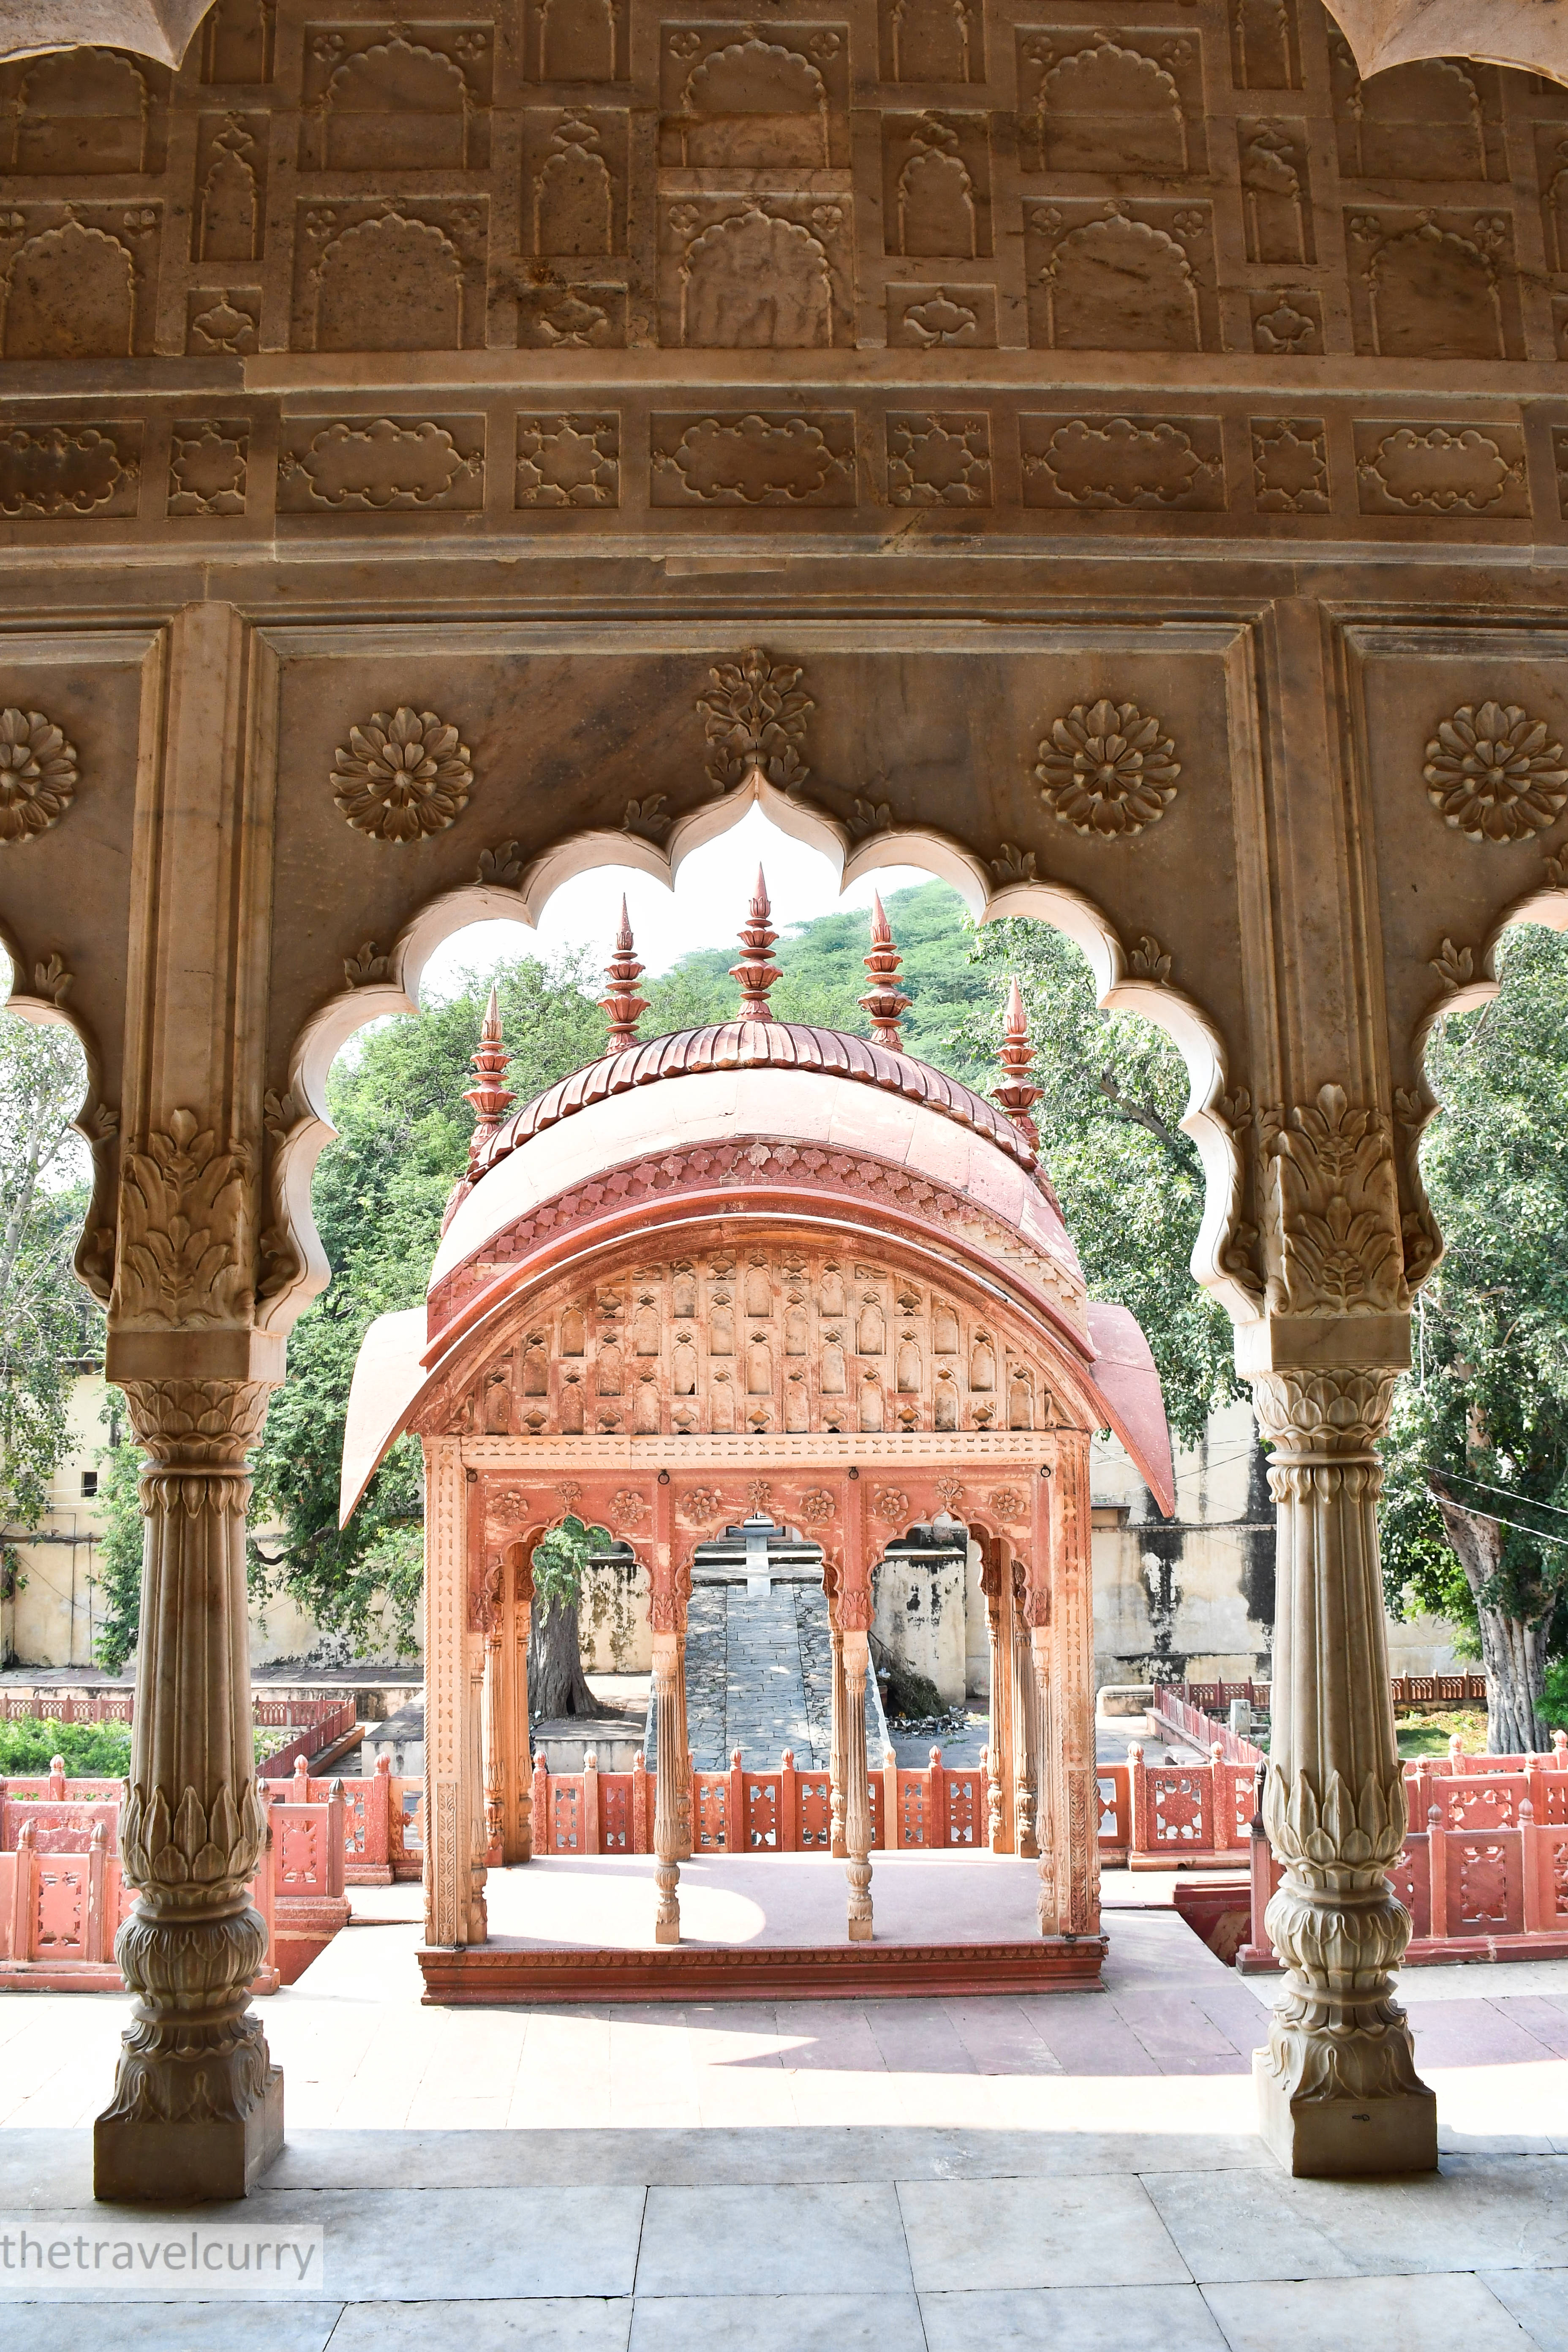 The ornate jharokha in Moosi maharani chhatri facing the lake